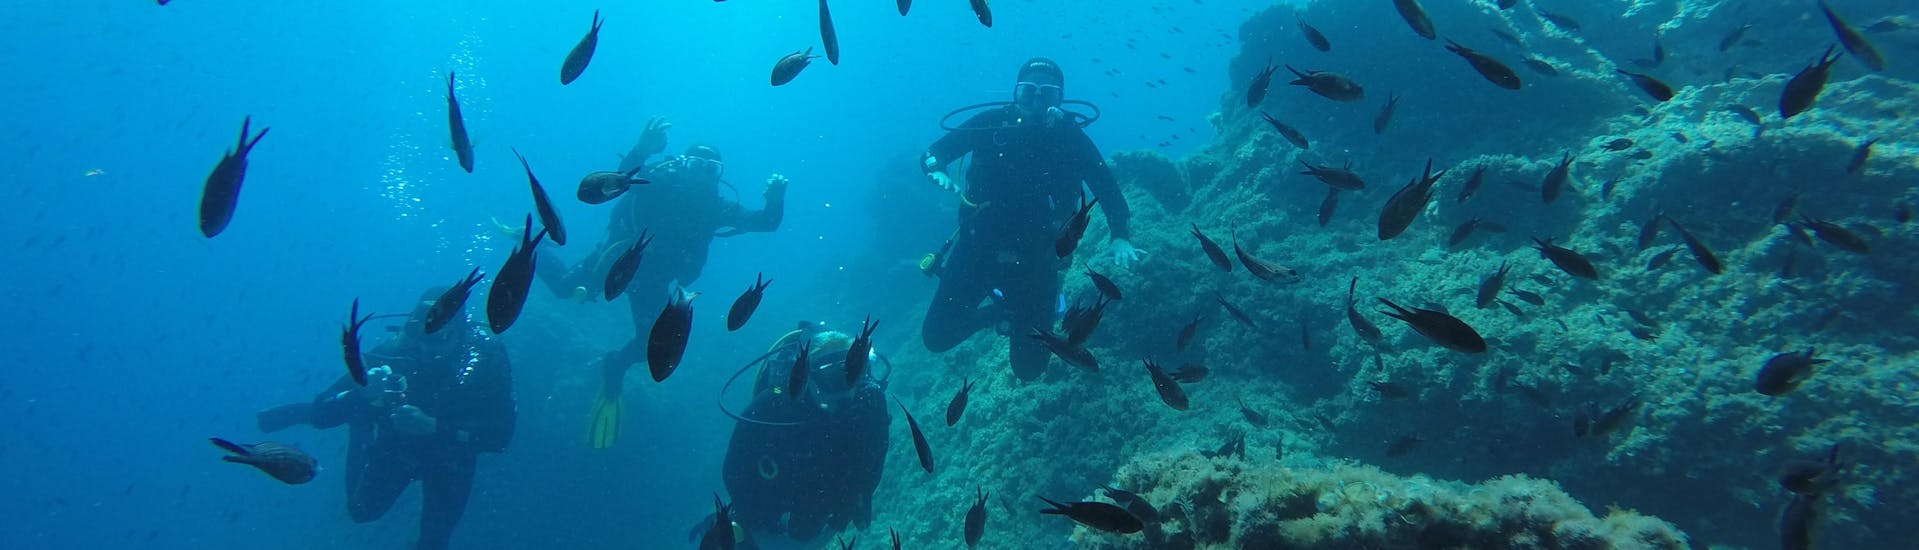 PADI Advanced Open Water Diver Course in Dubrovnik.